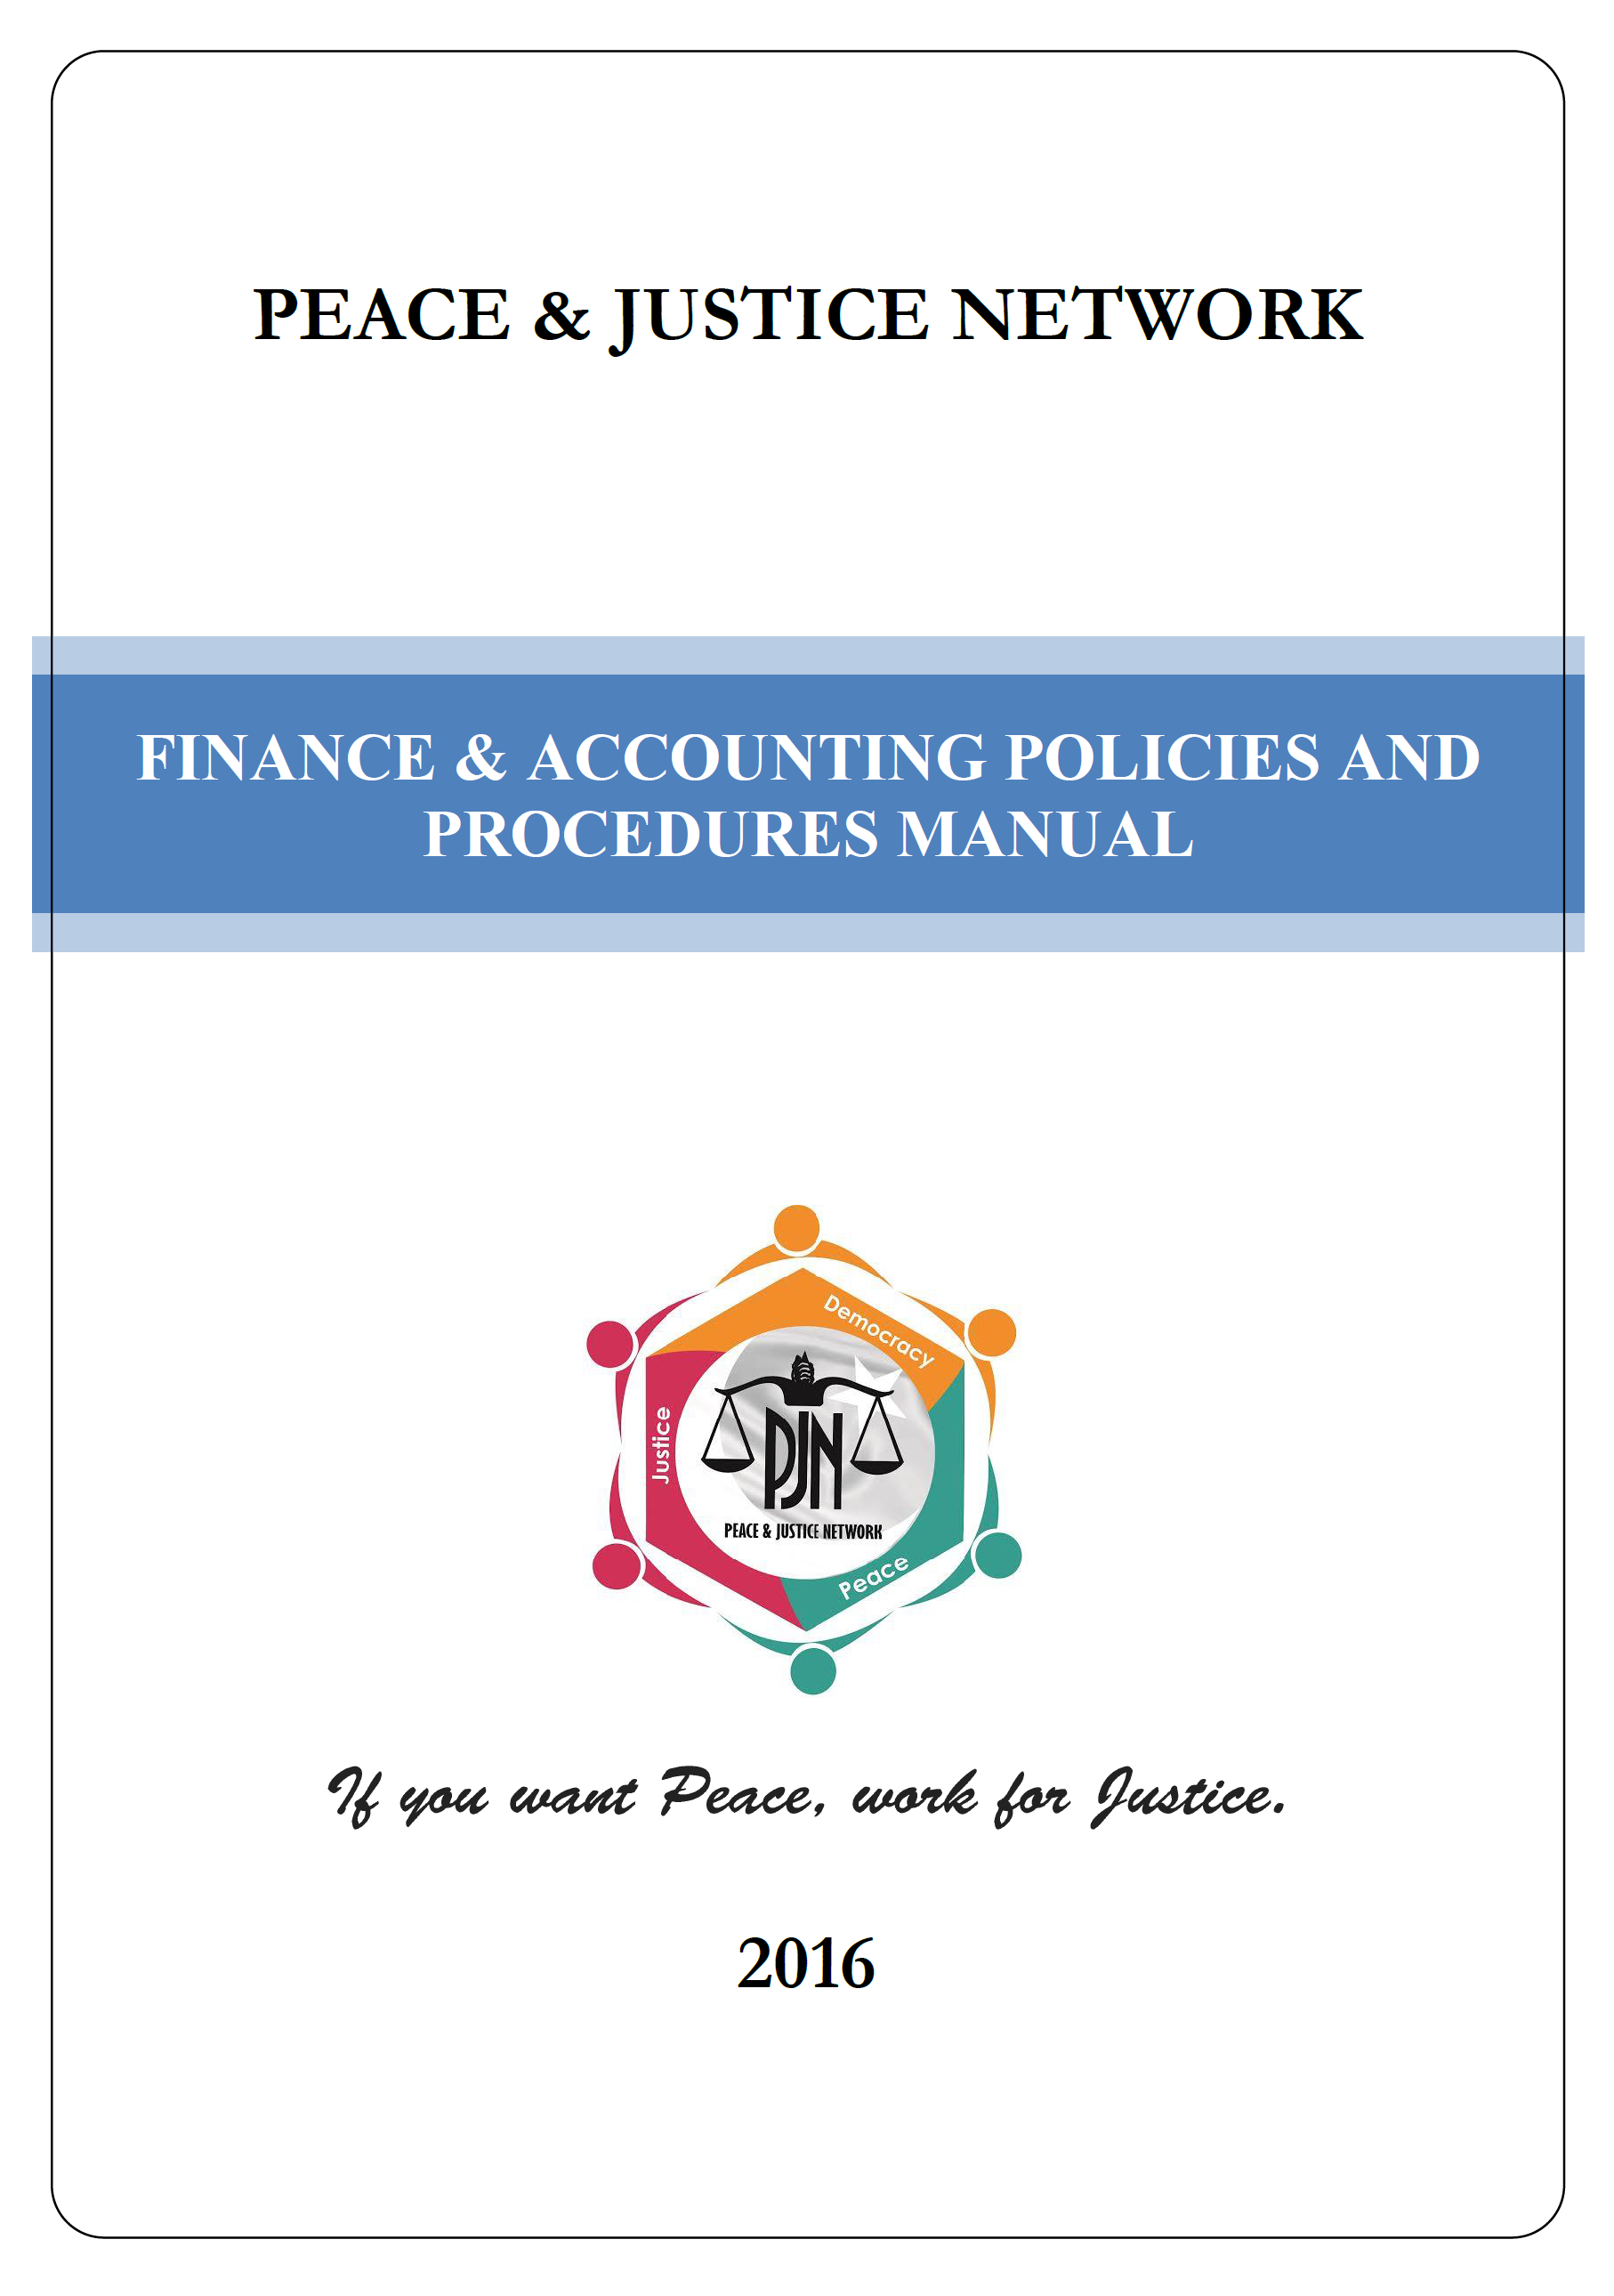 Finance and Accounting Manual PJN